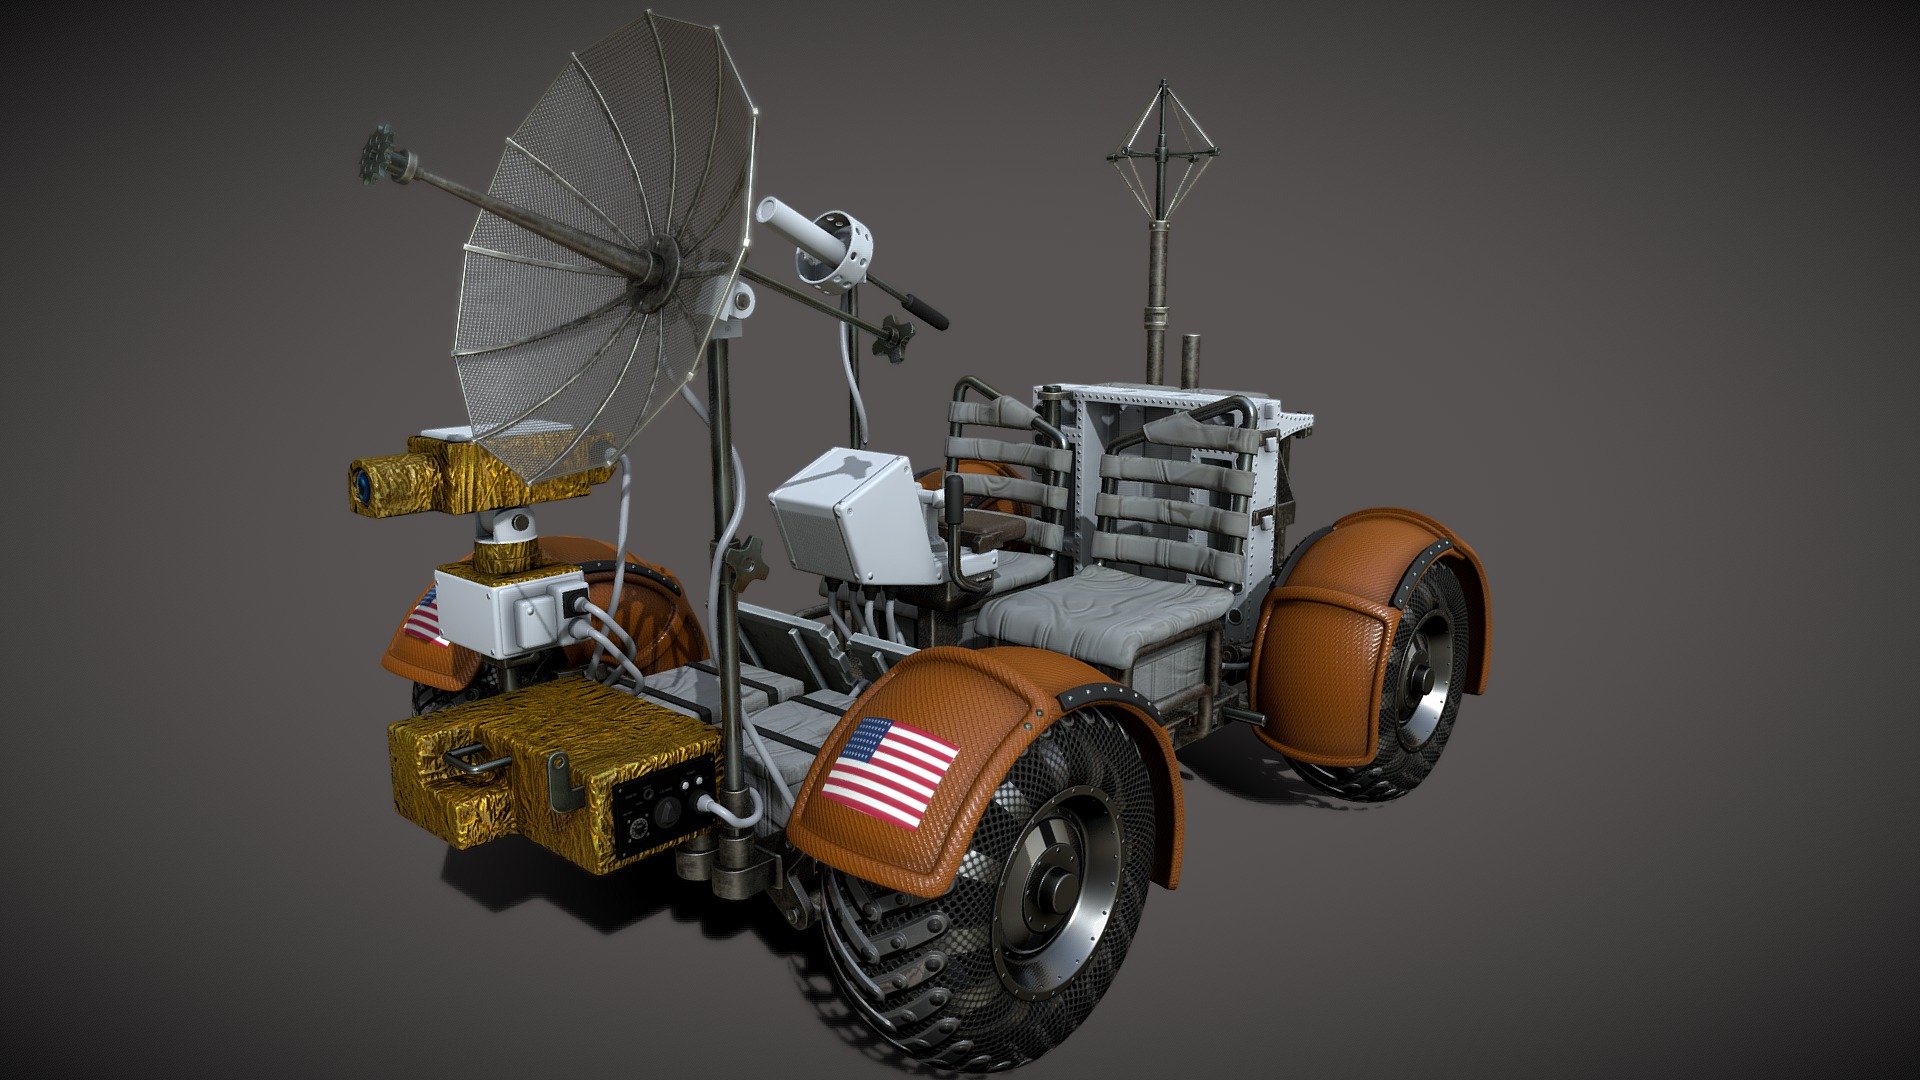 kerbal moon rover